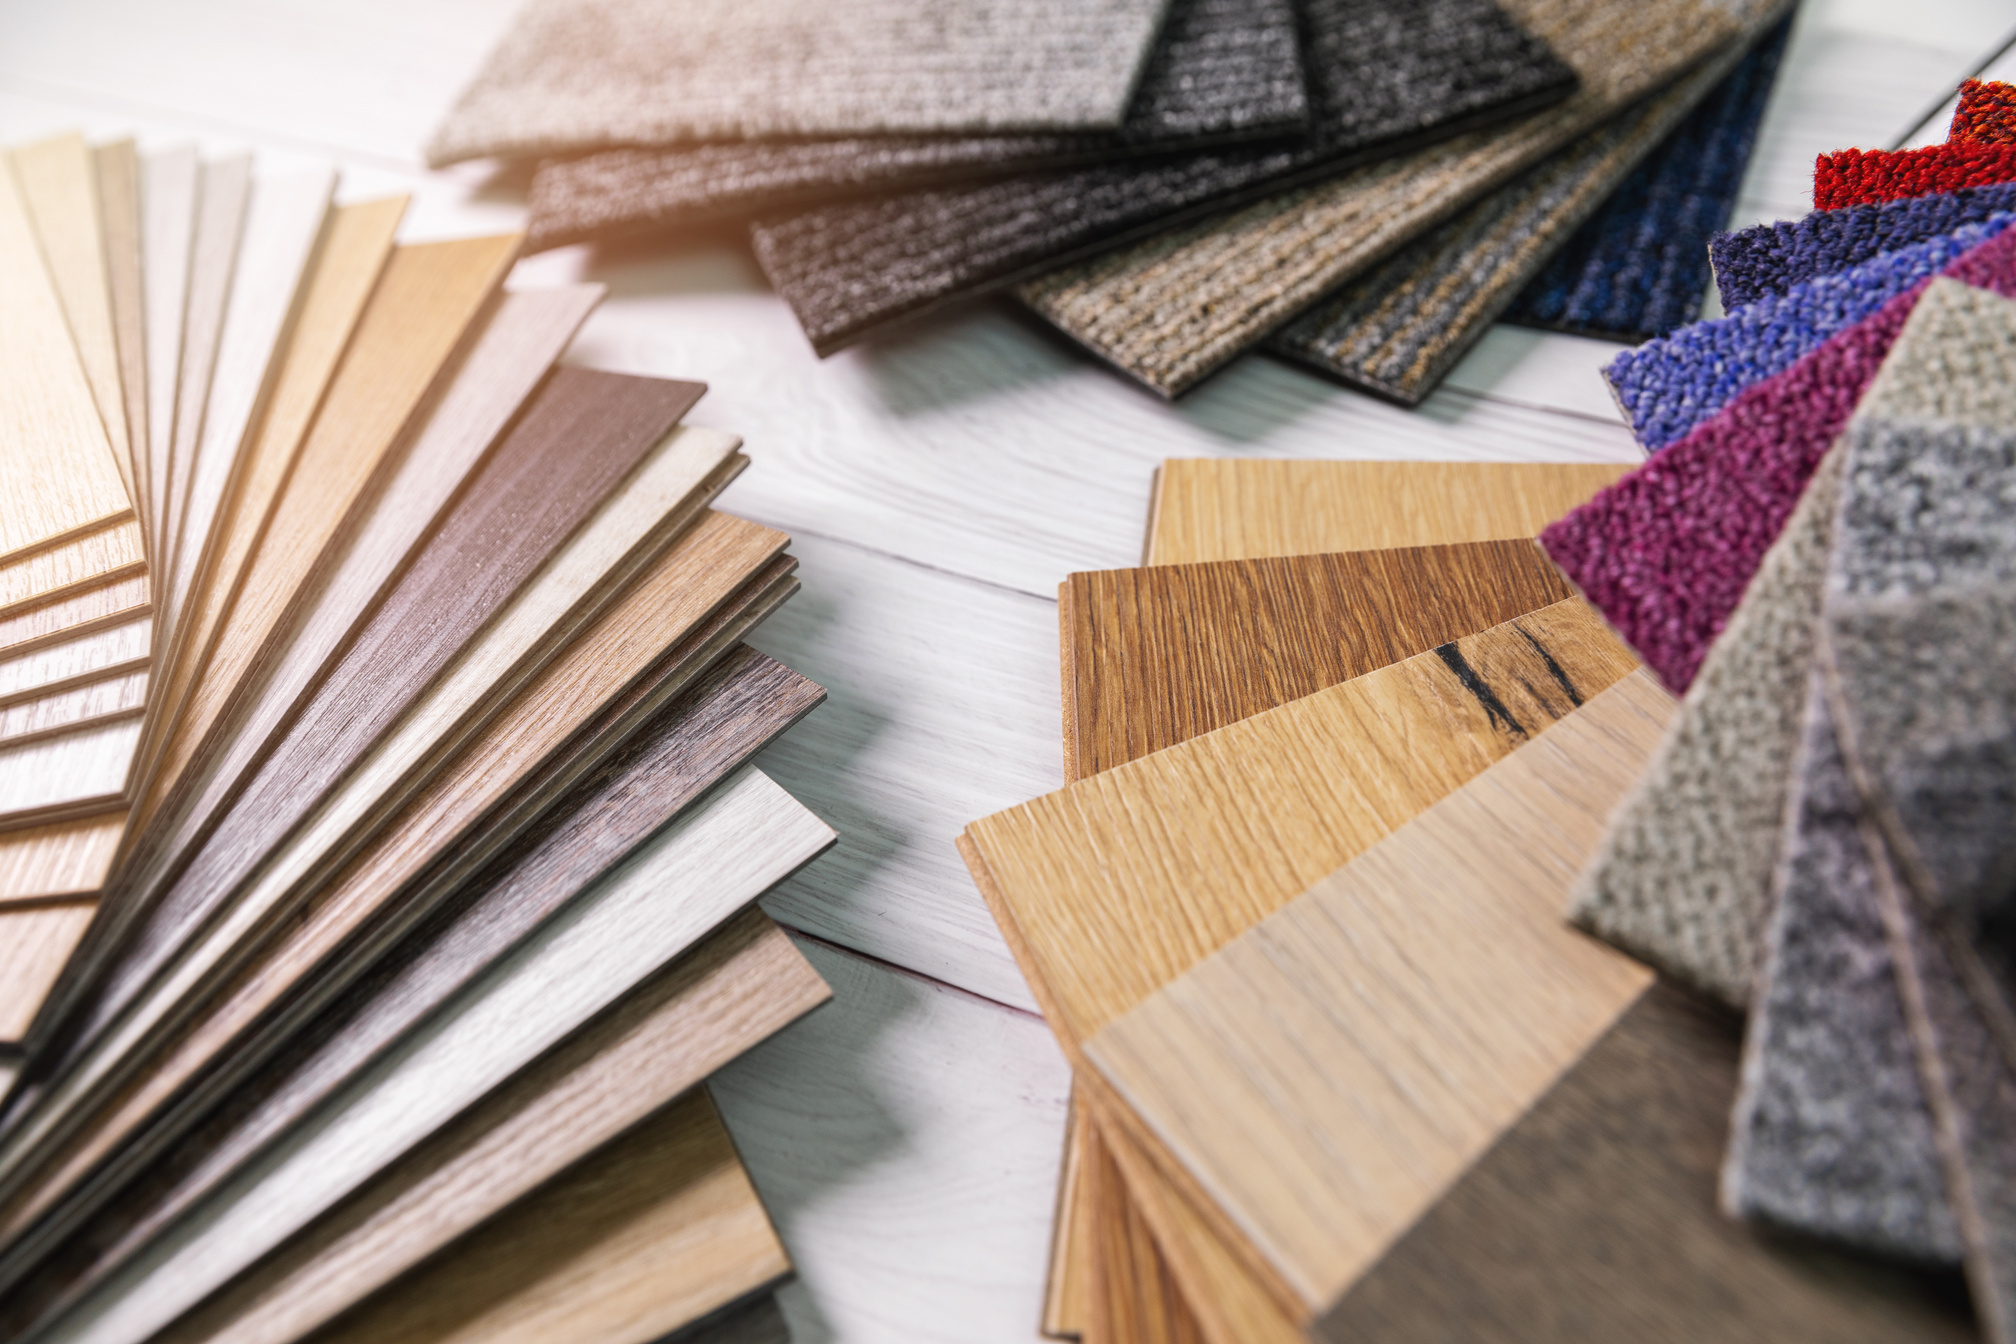 flooring and furniture materials - floor carpet and wooden laminate samples